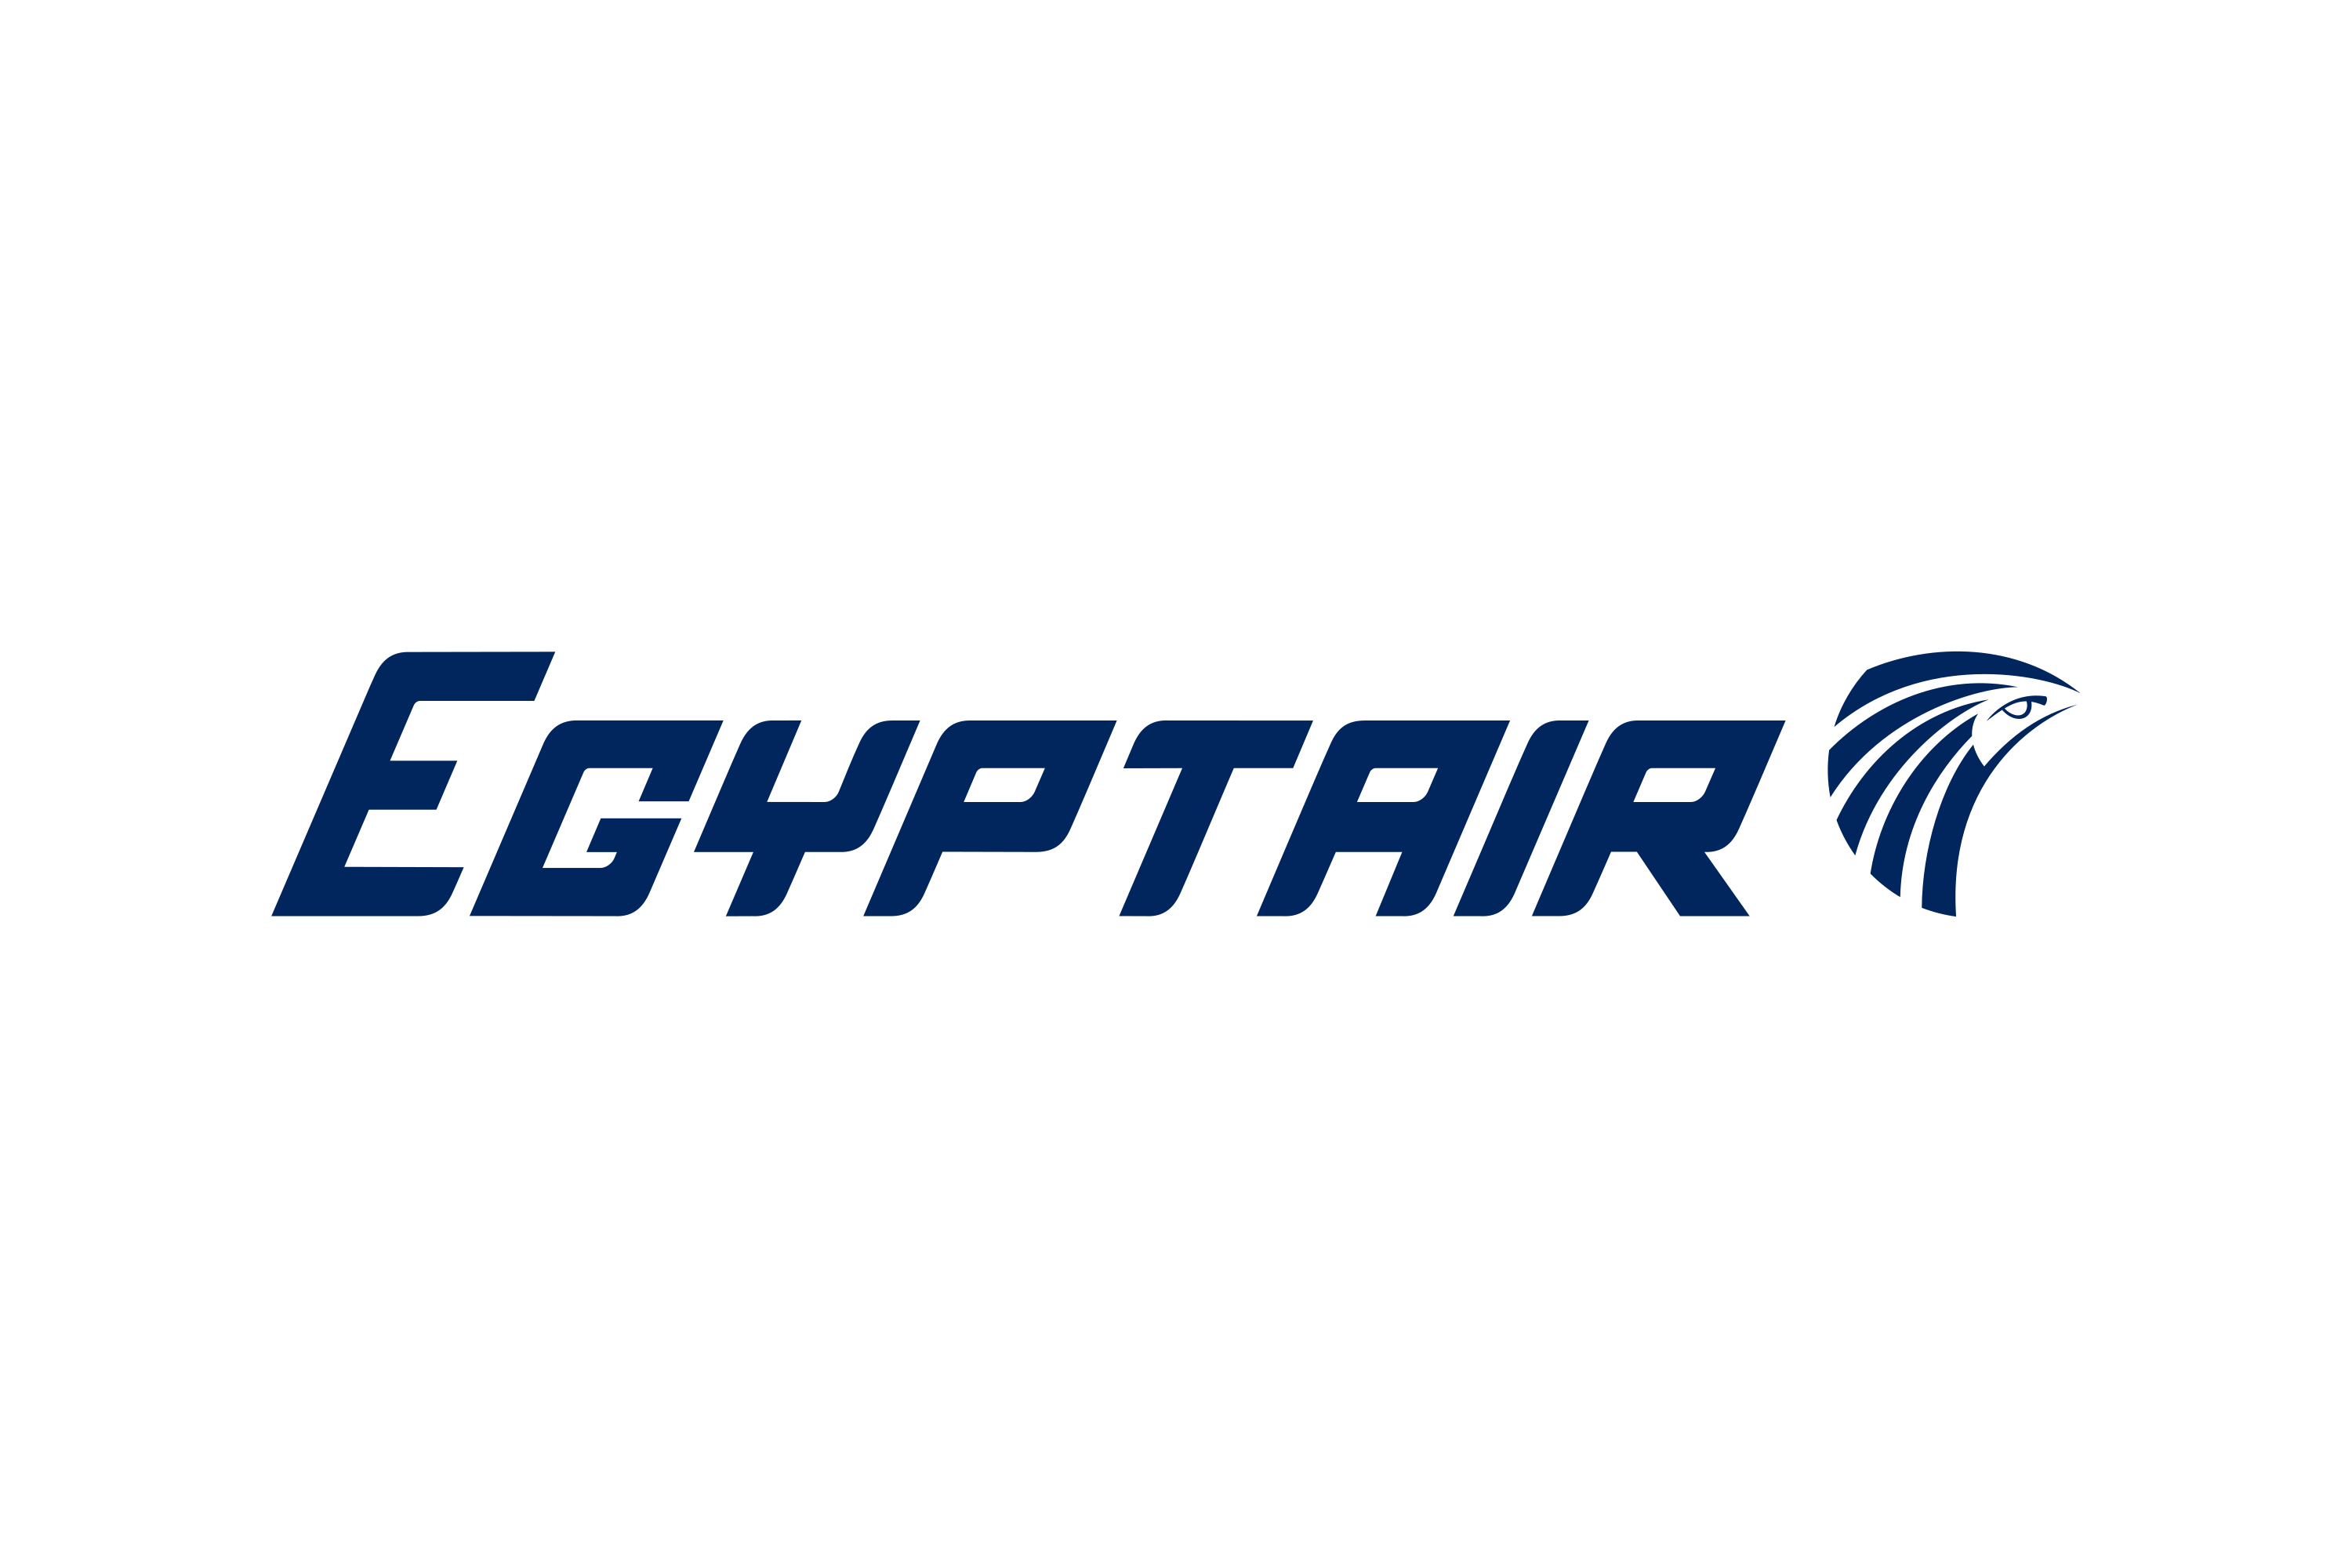 Egypt Air Dummy Ticket